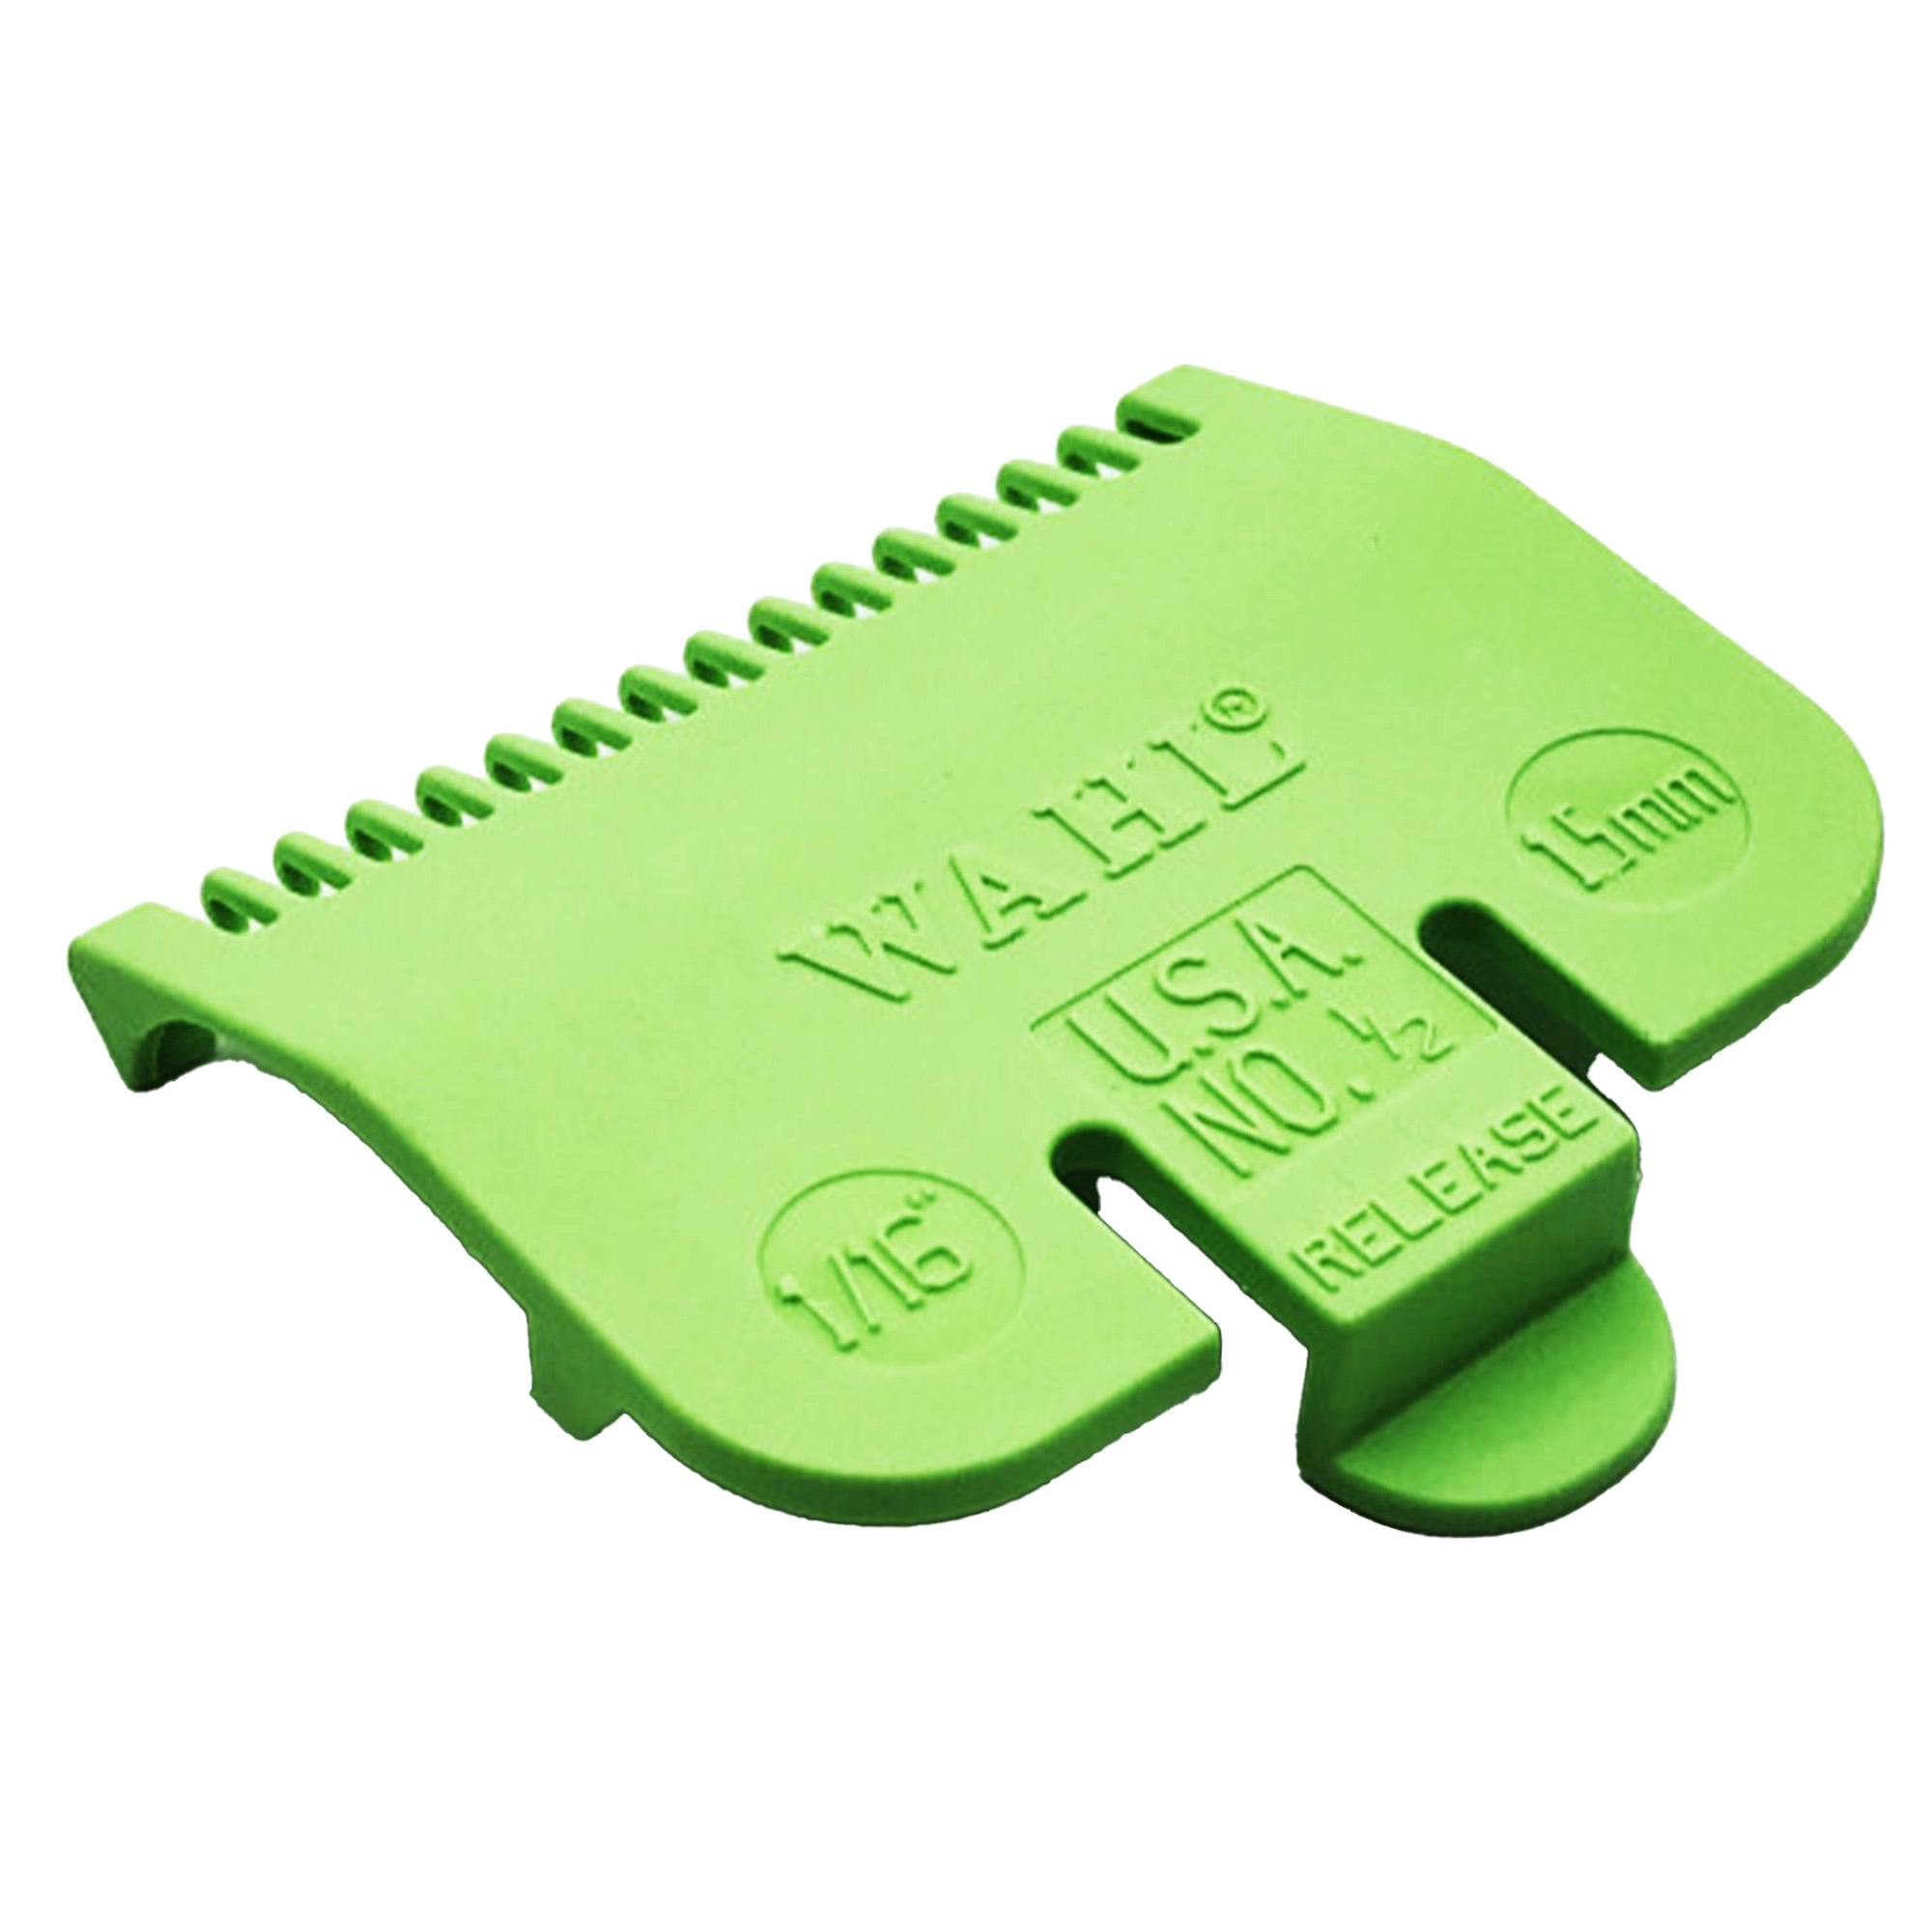 Wahl - No.0.5 Attachment Comb Guard 1.5mm Lime Green 3137-2501